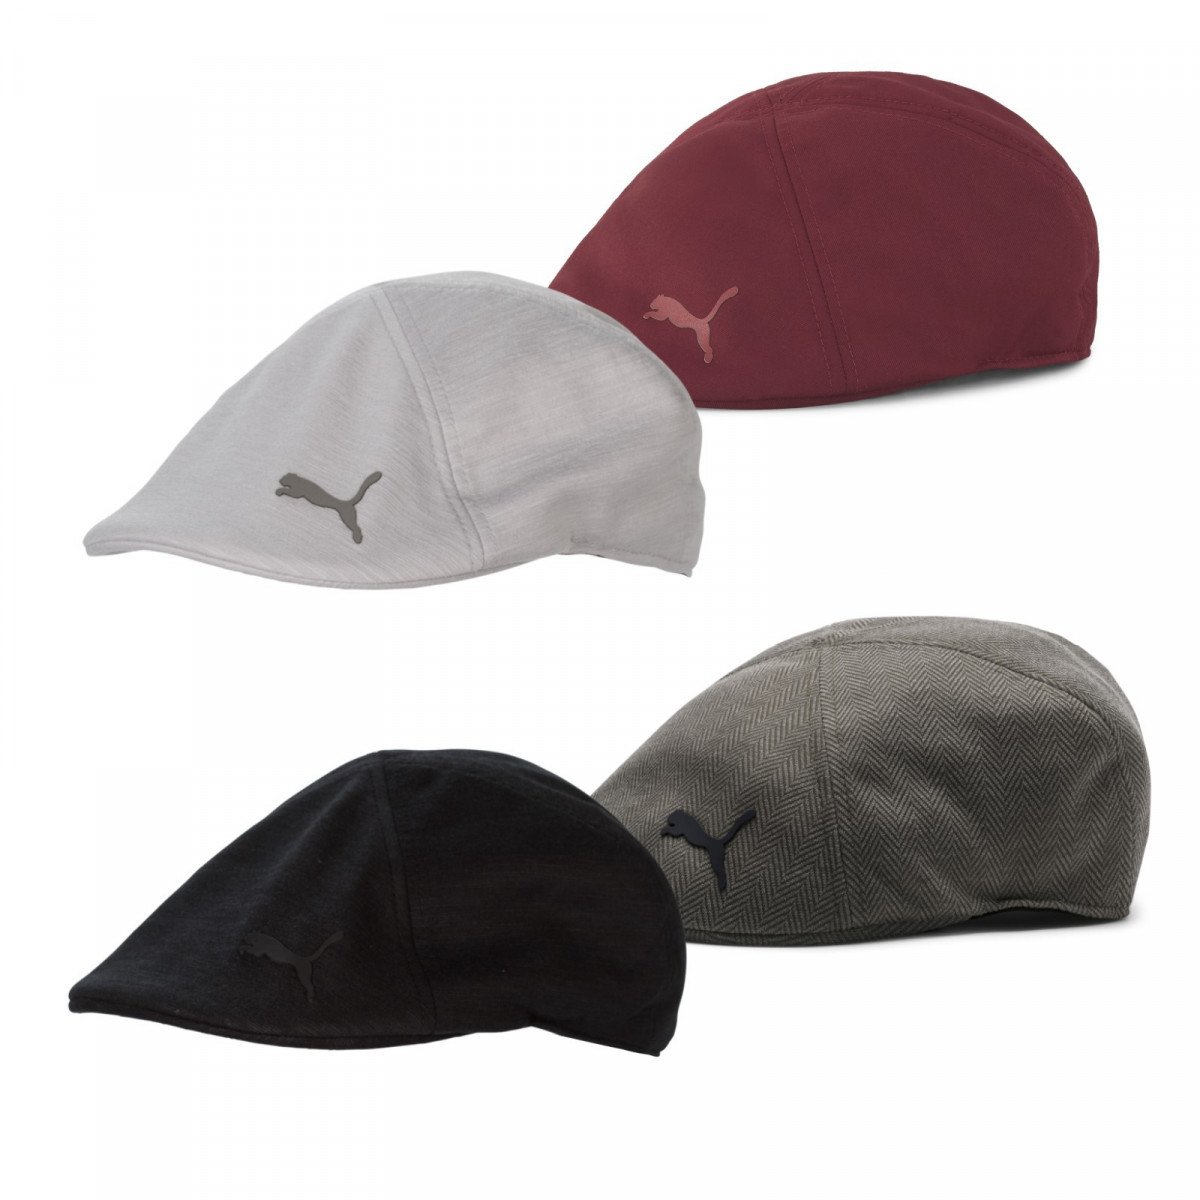 Hurricane Golf & - Puma Headwear Golf Discount Golf - Golf Driver Headwear Apparel/Men\'s Hats